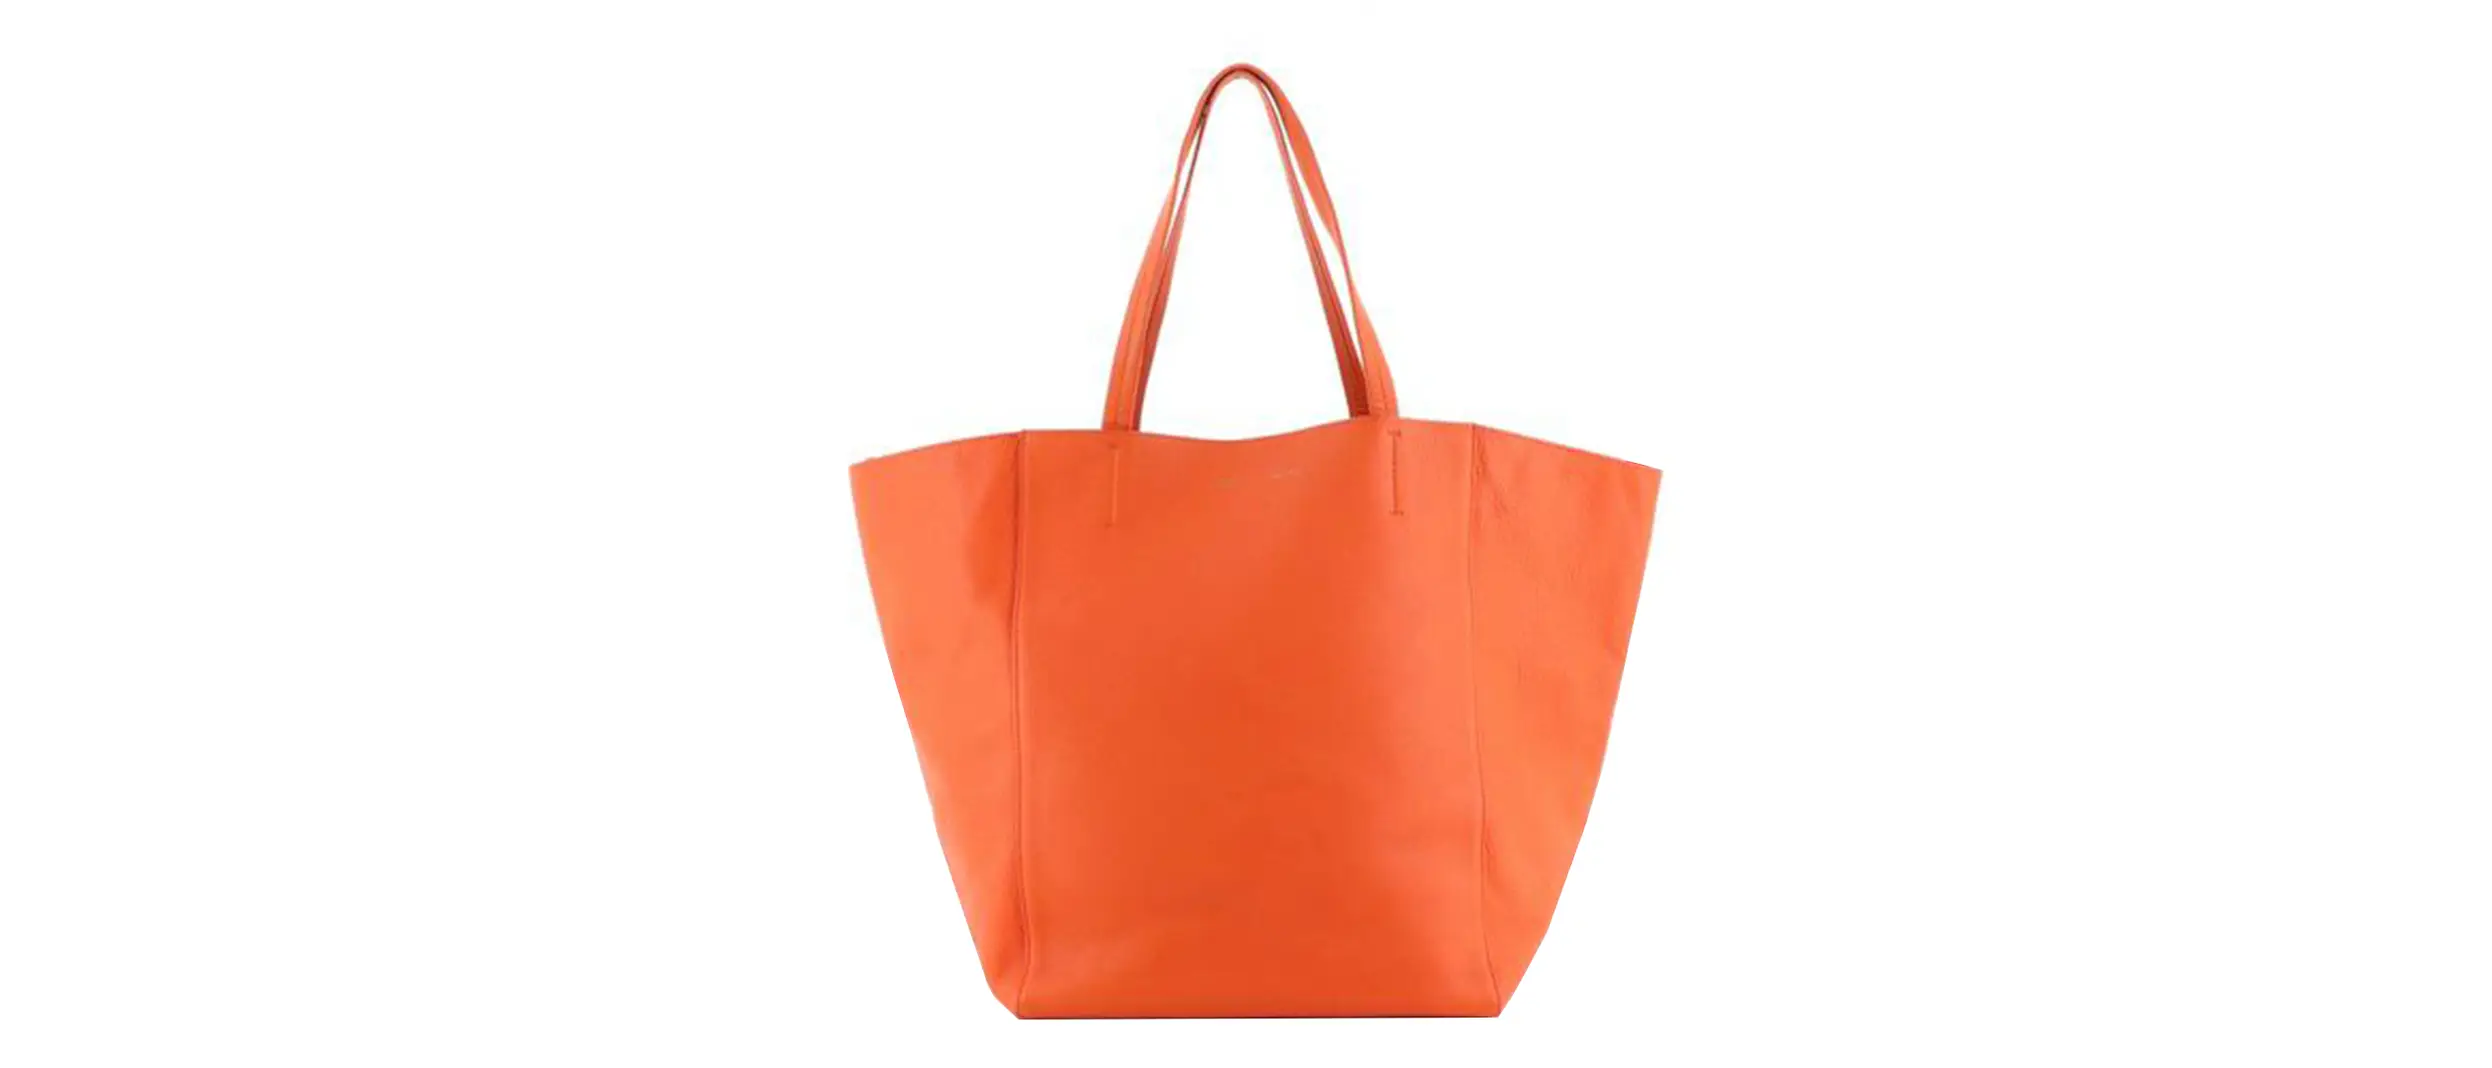 celine-edge-handbag-in-orange-leather.jpg